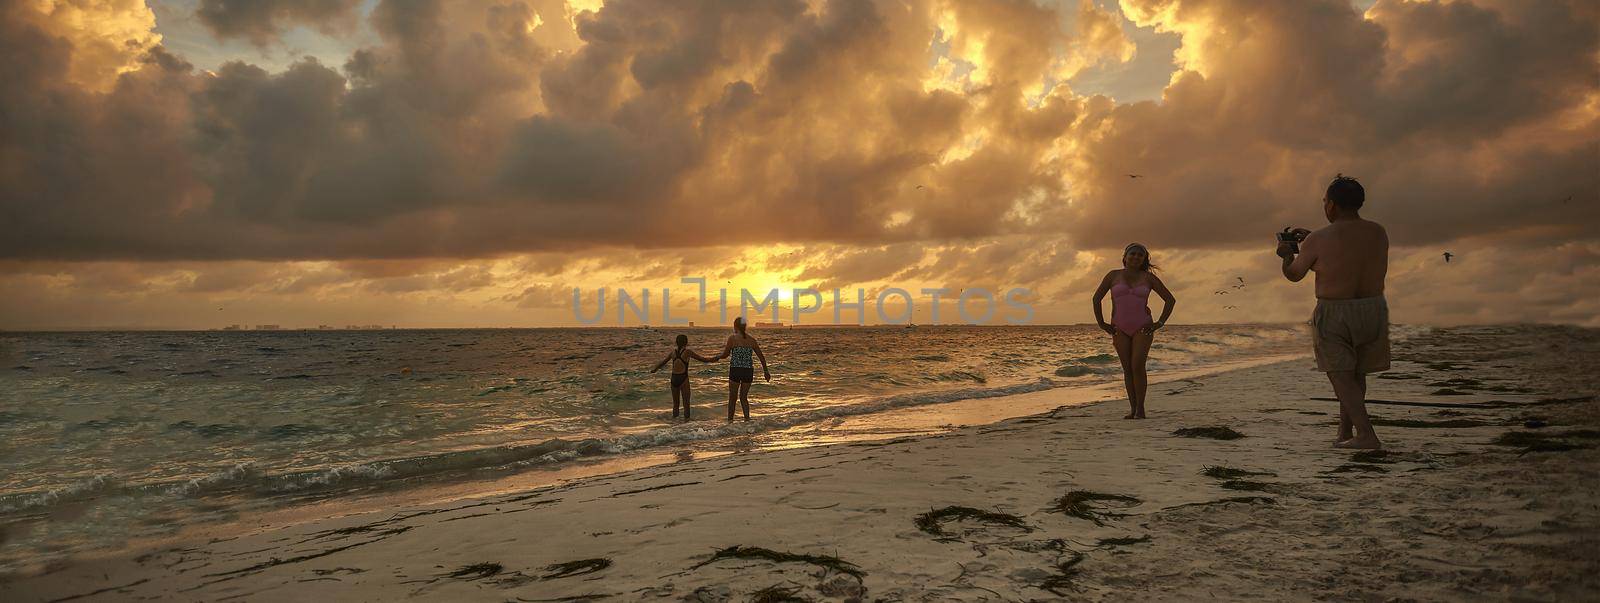 Caribbean beach sunset family by pippocarlot